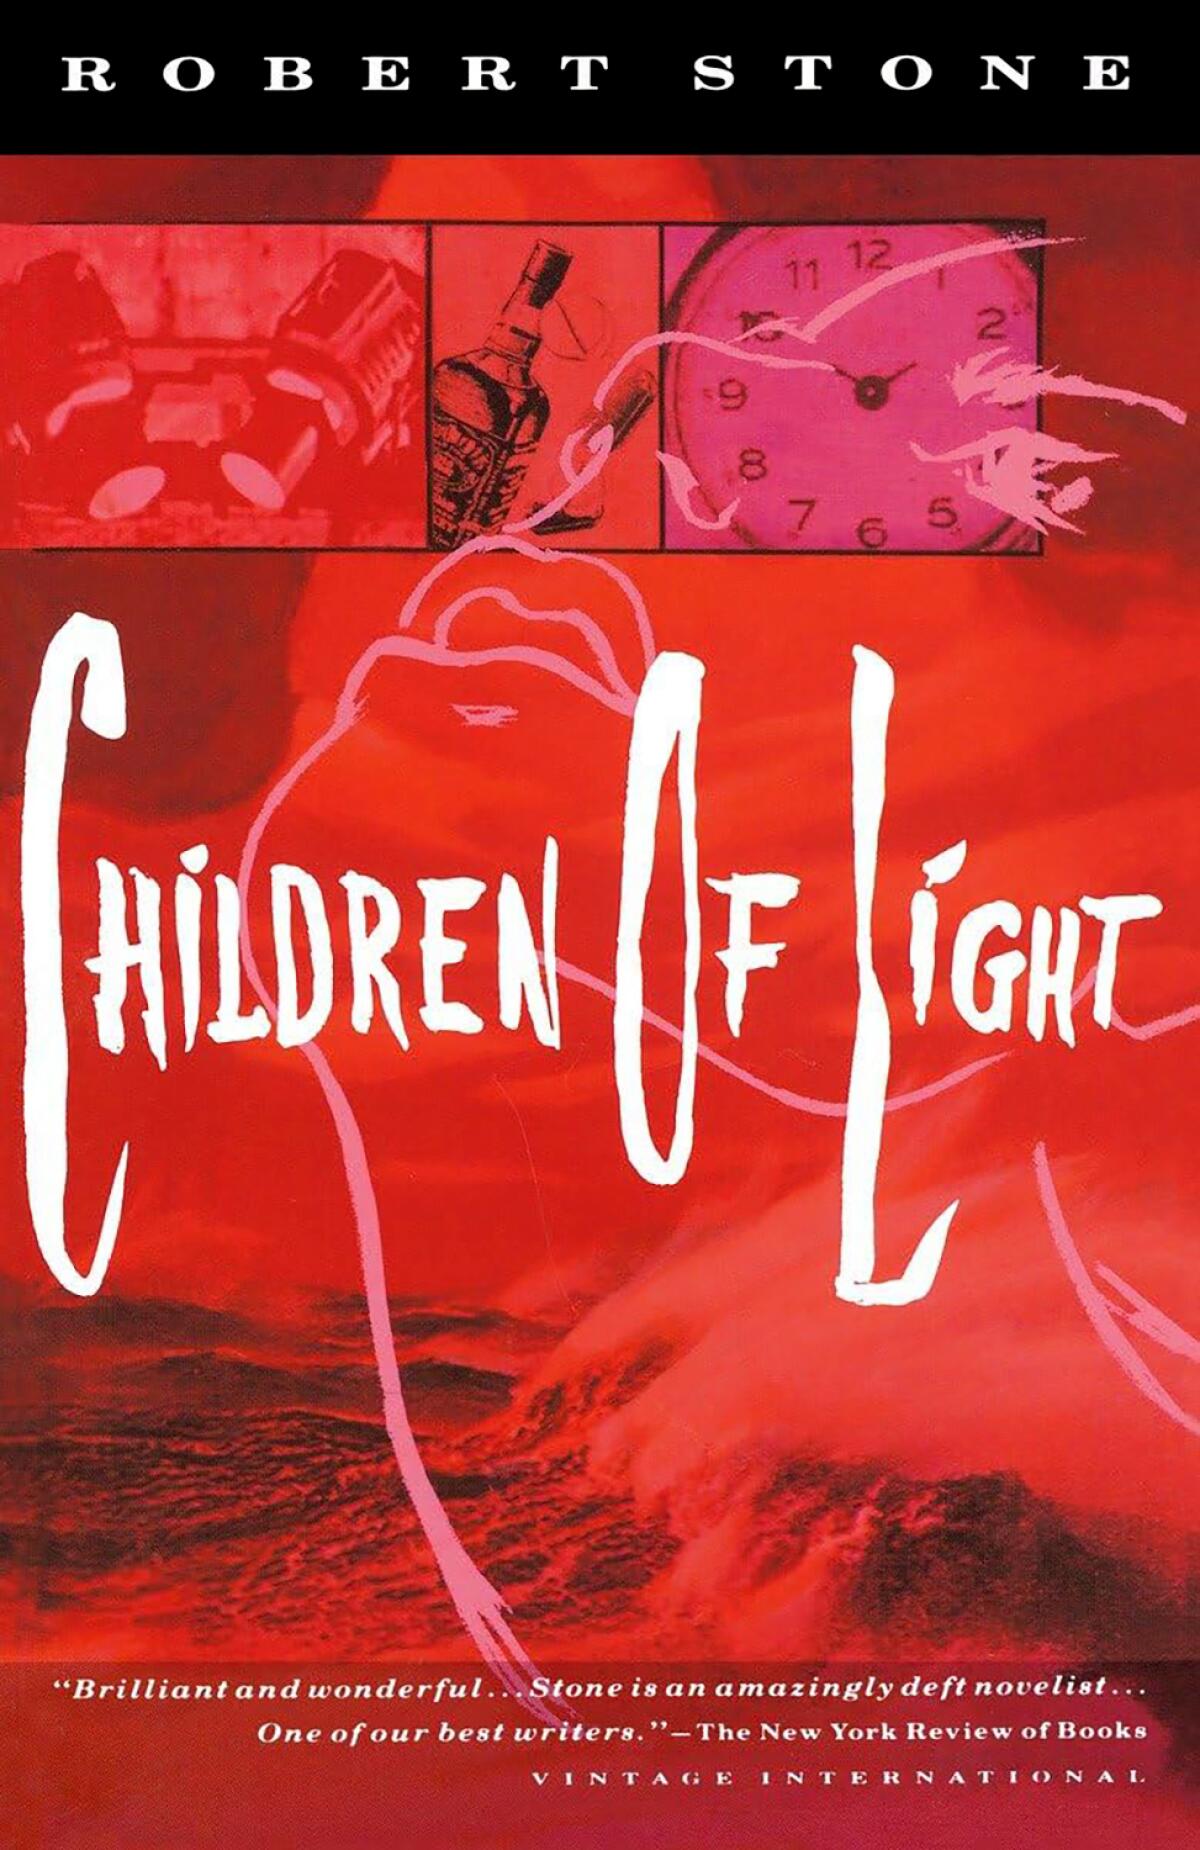 "Children of Light" by Robert Stone,1986